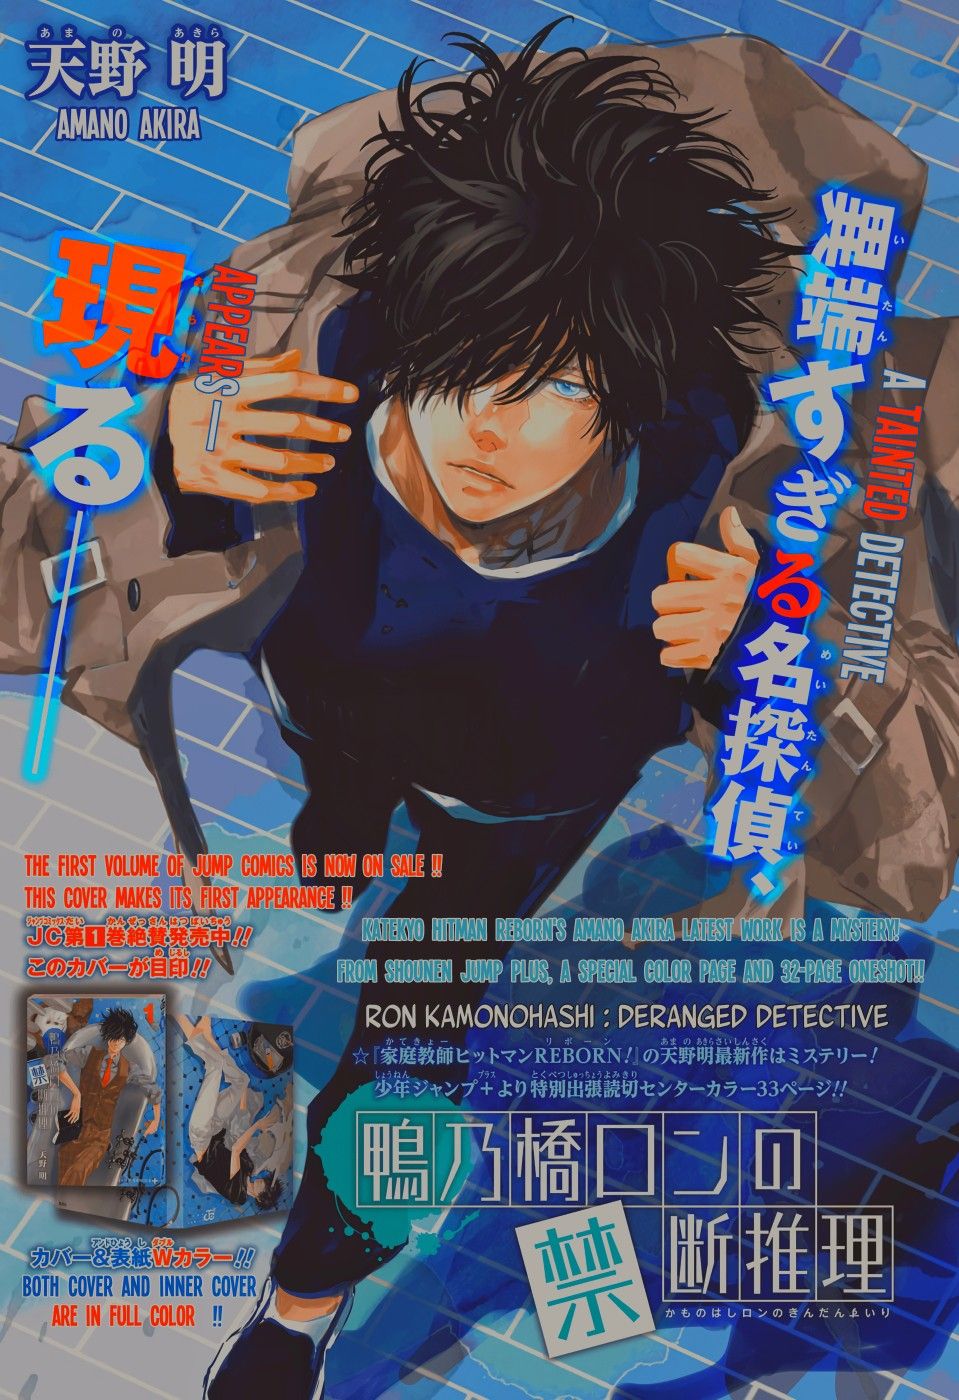 ron kamonohashi: deranged detective. Manga covers, Anime, Japanese aesthetic